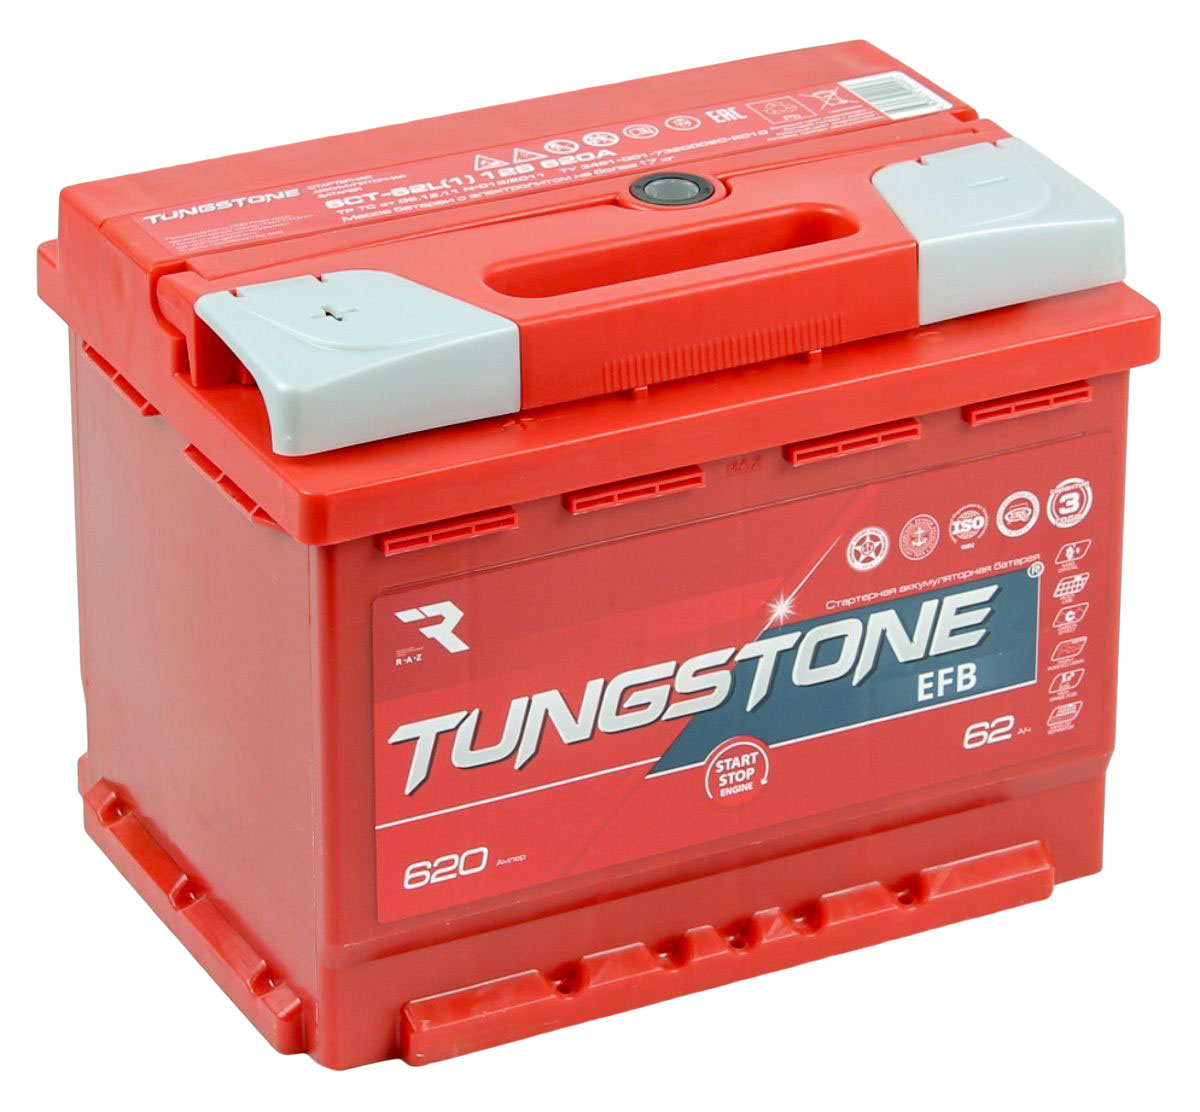 Battery 60. Tungstone EFB 6ст -77.0. Tungstone аккумуляторы 60 Ач. Tungstone EFB 6ст -62.0. EFB 6ct-60.0.